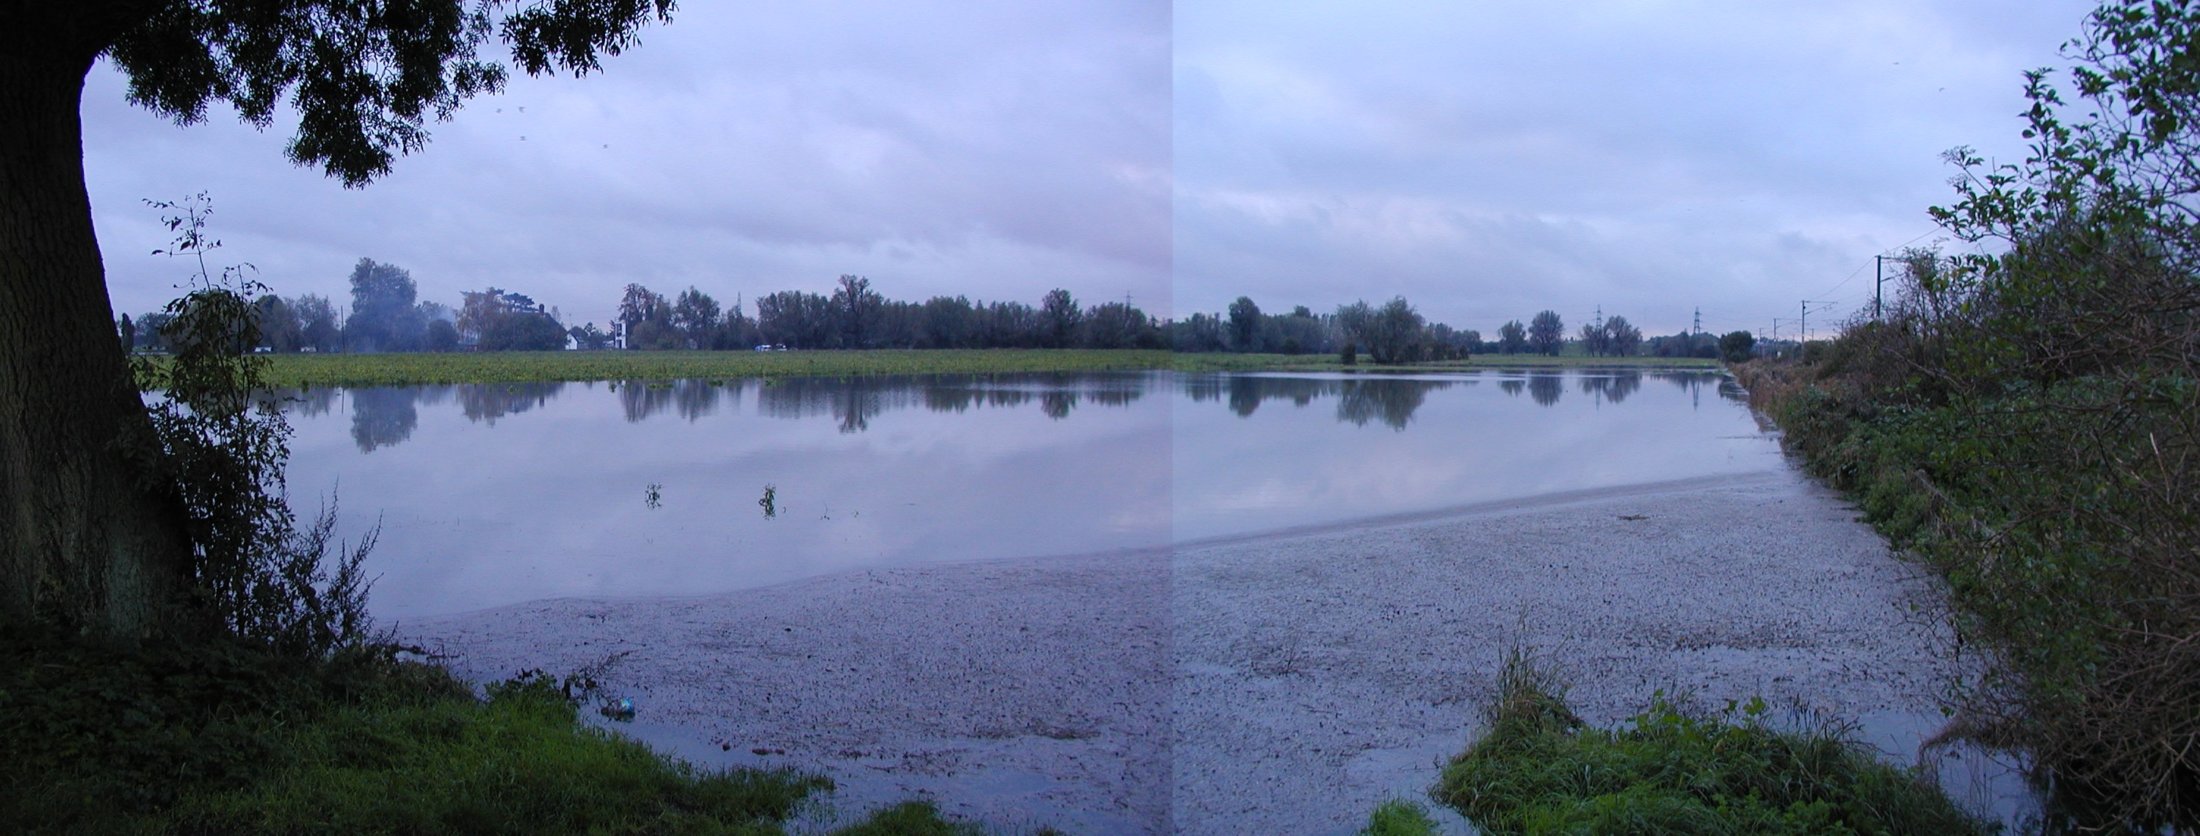 Flooding - October 2001